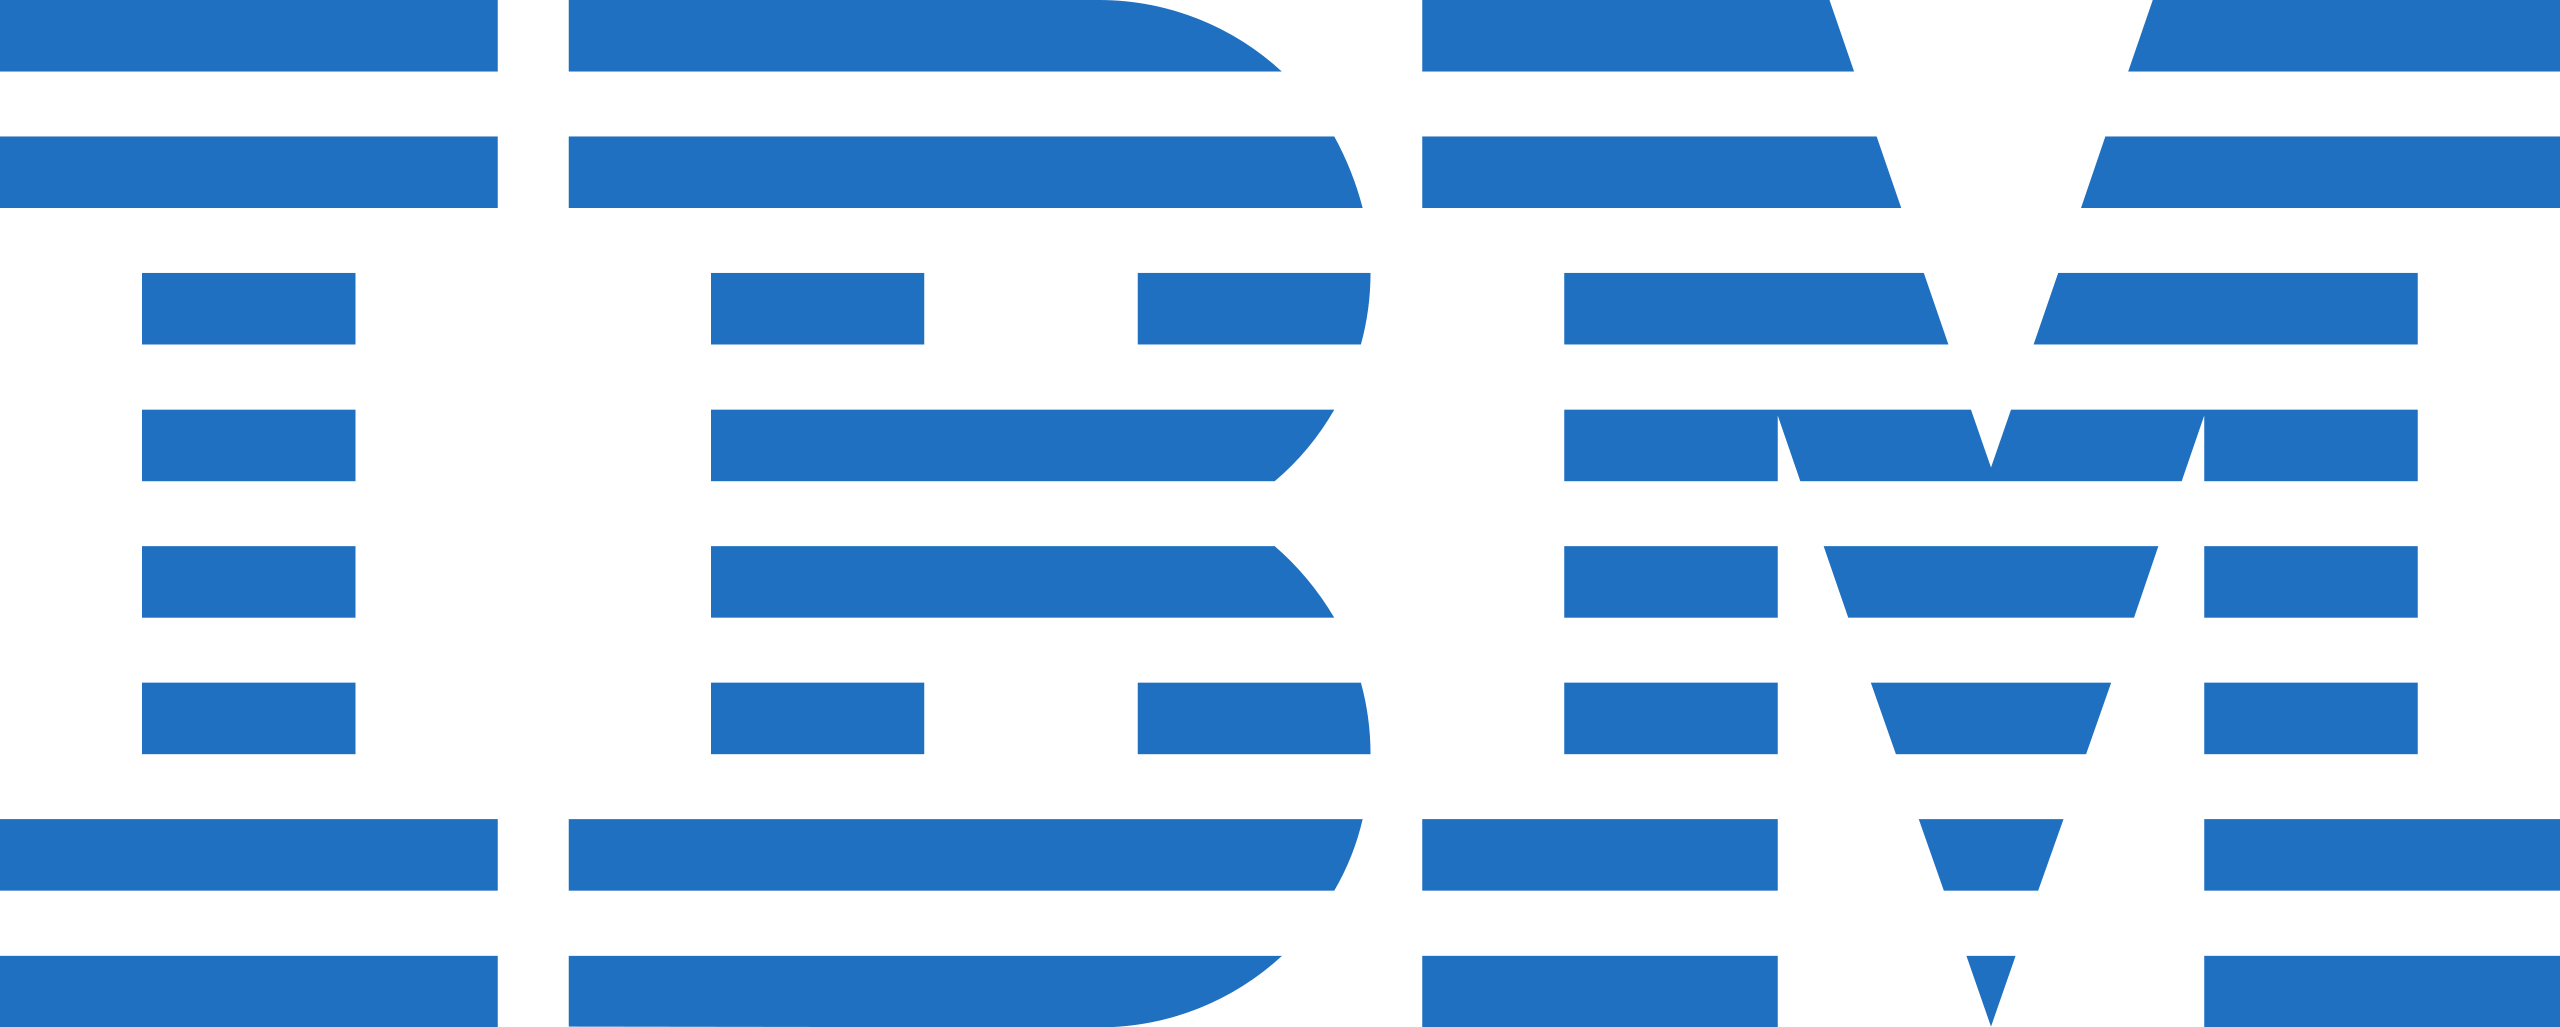 File:IBM logo.svg - Wikimedia Commons